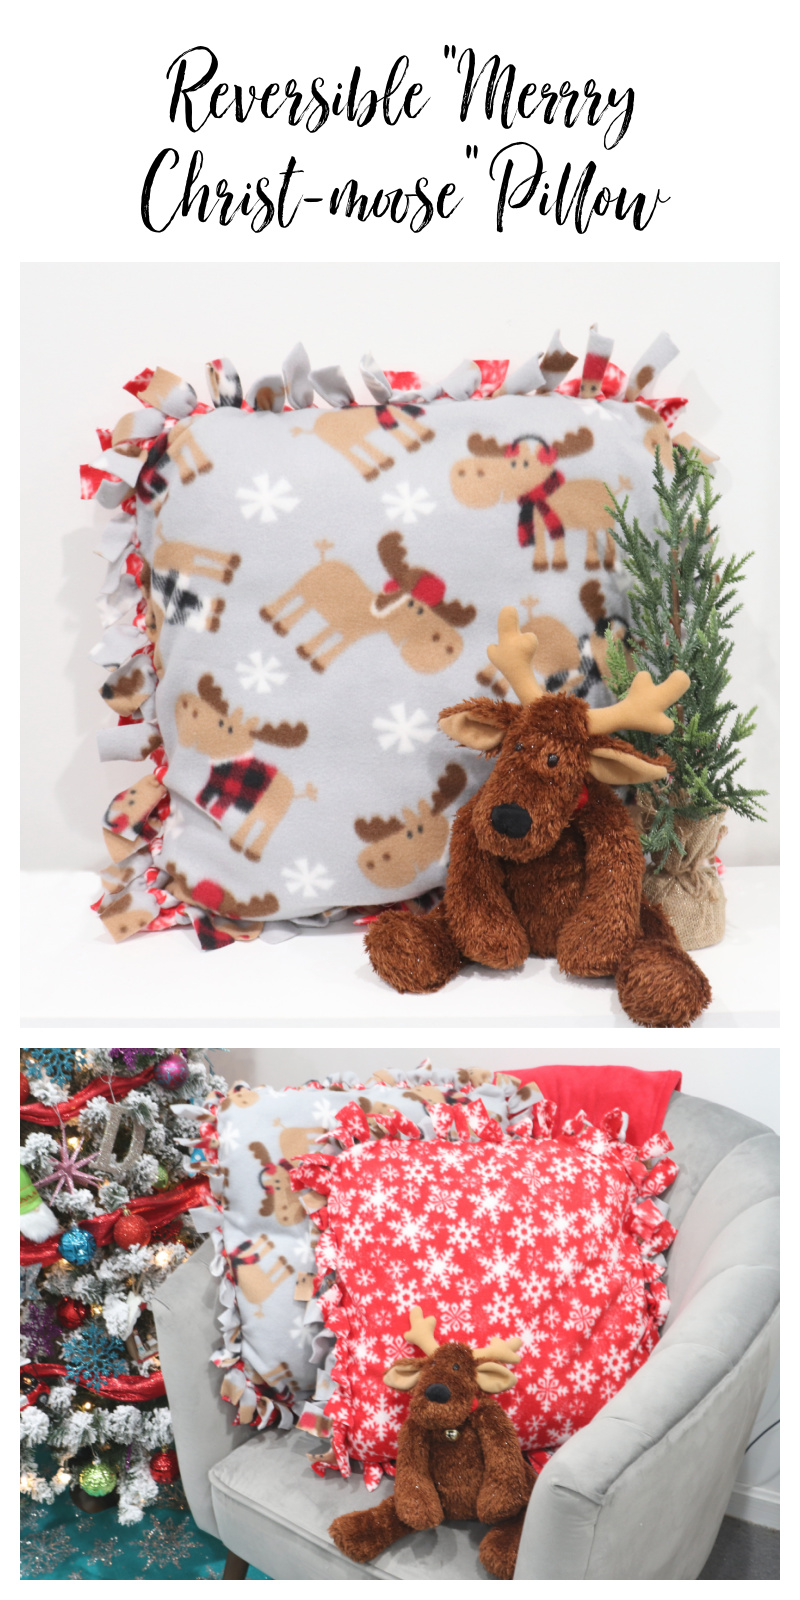 Merry Christ-moose Pillow